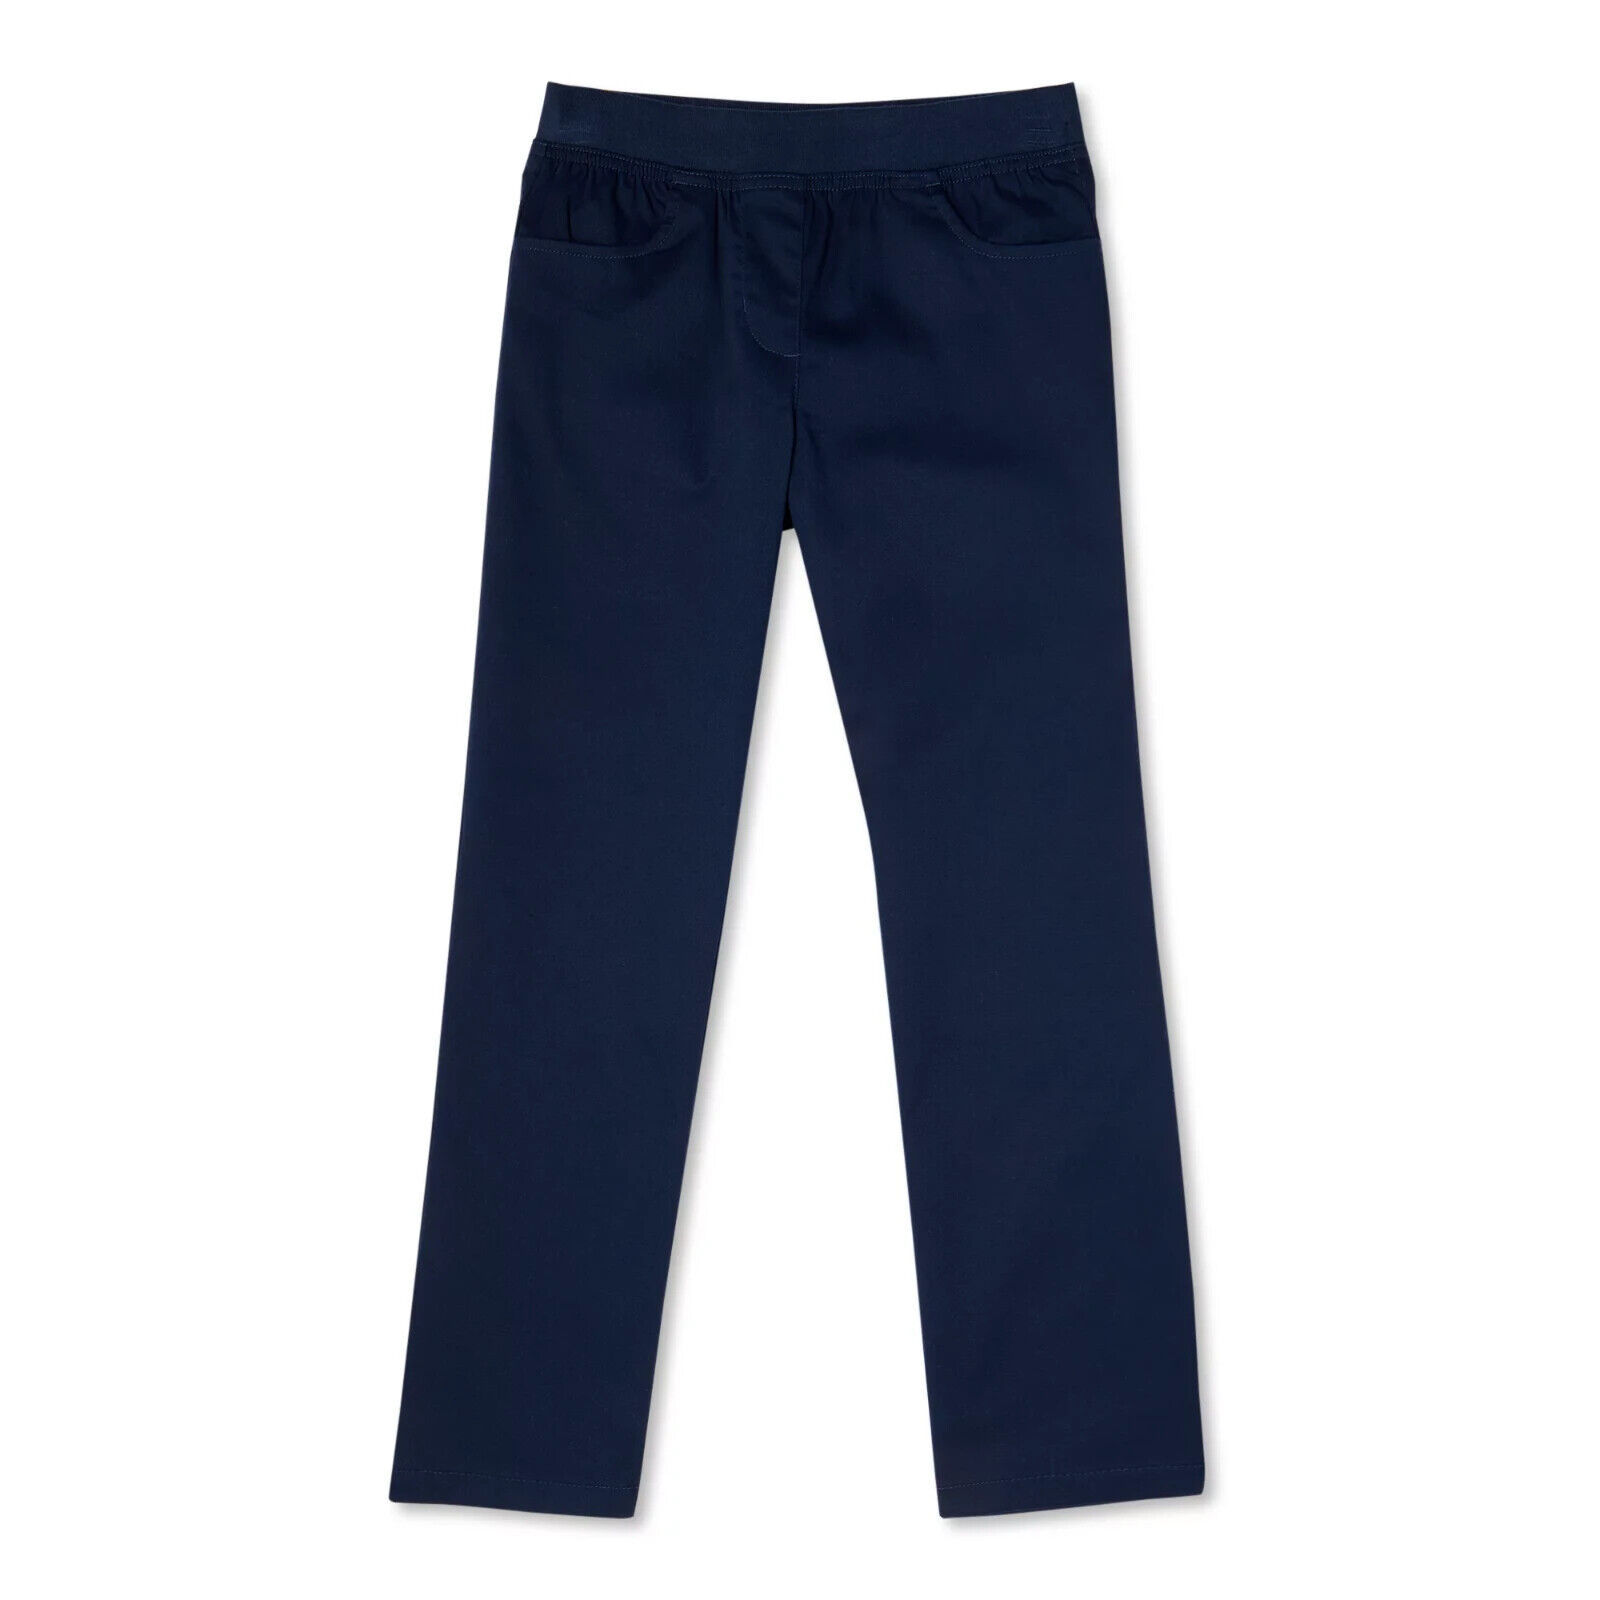 Wonder Nation Girls School Uniform Stretch Twill Pull-On Pants Blue - Size 16 - $14.99